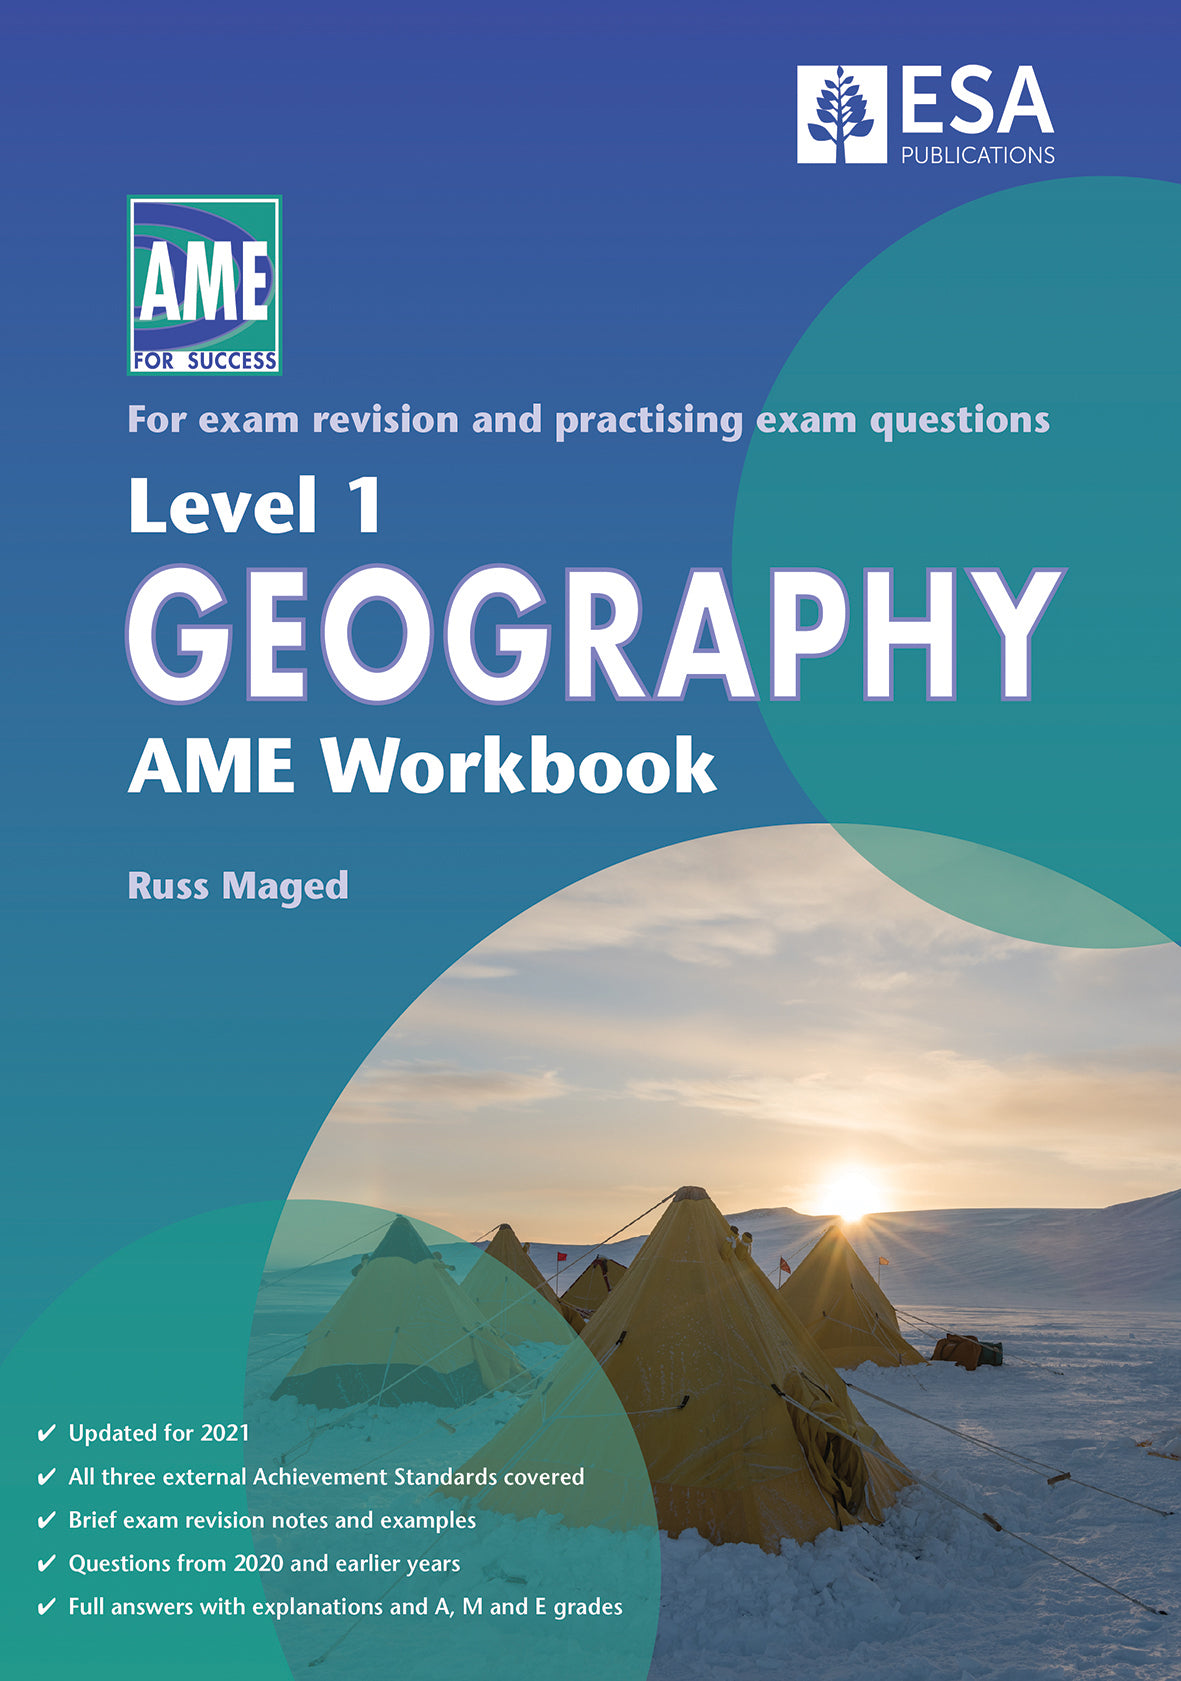 Level 1 Geography AME Workbook